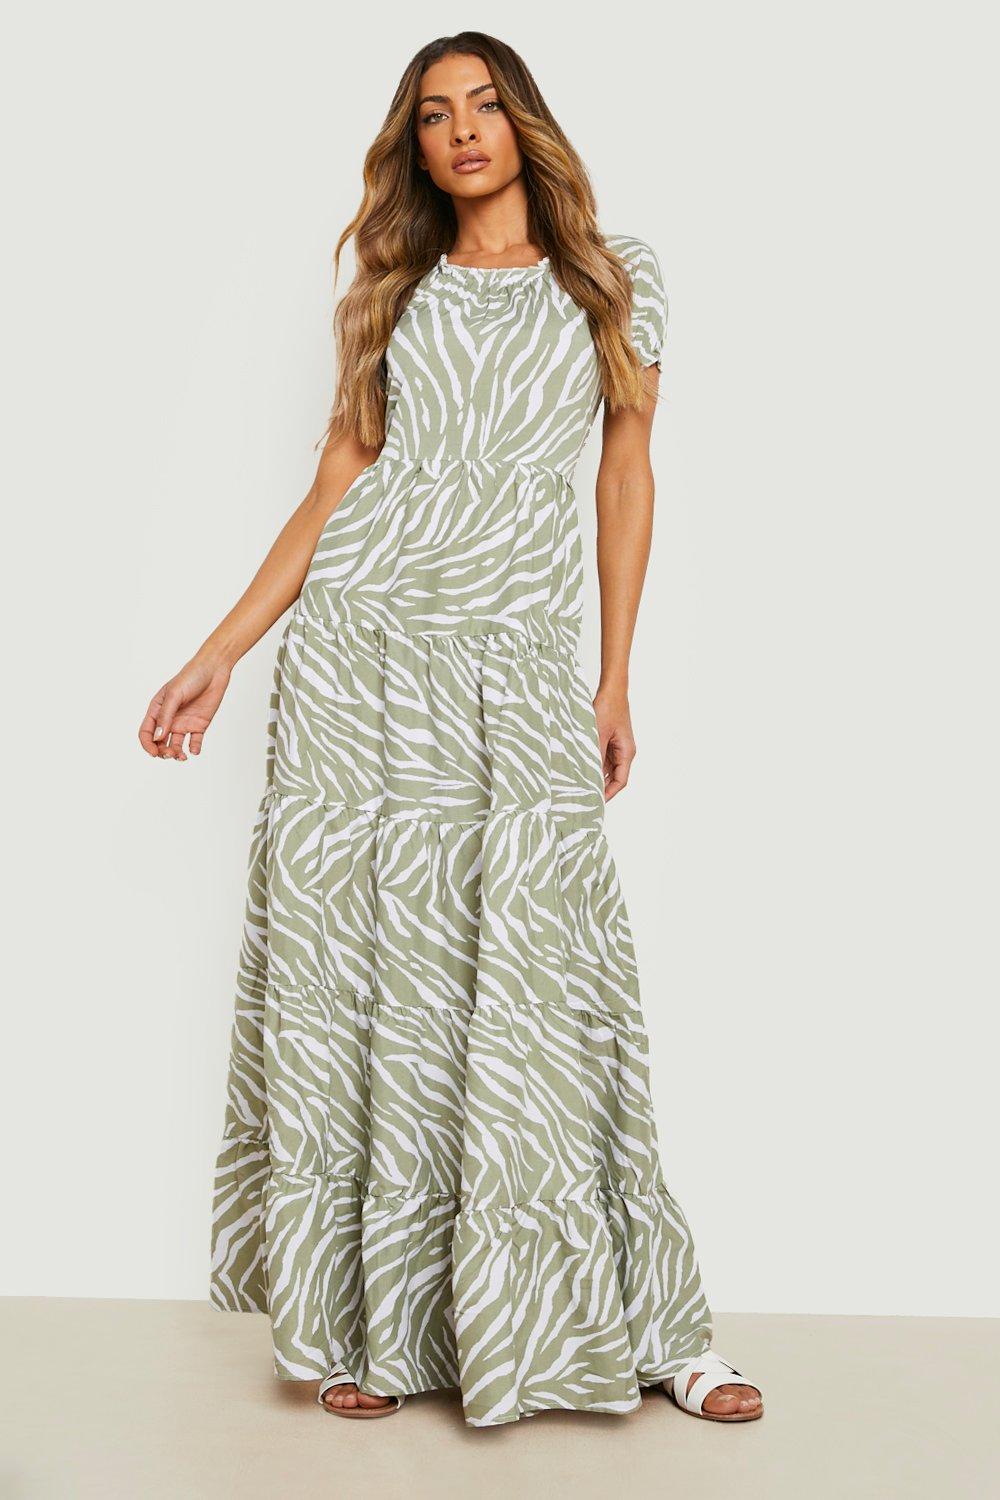 Zebra Tiered Maxi Dress